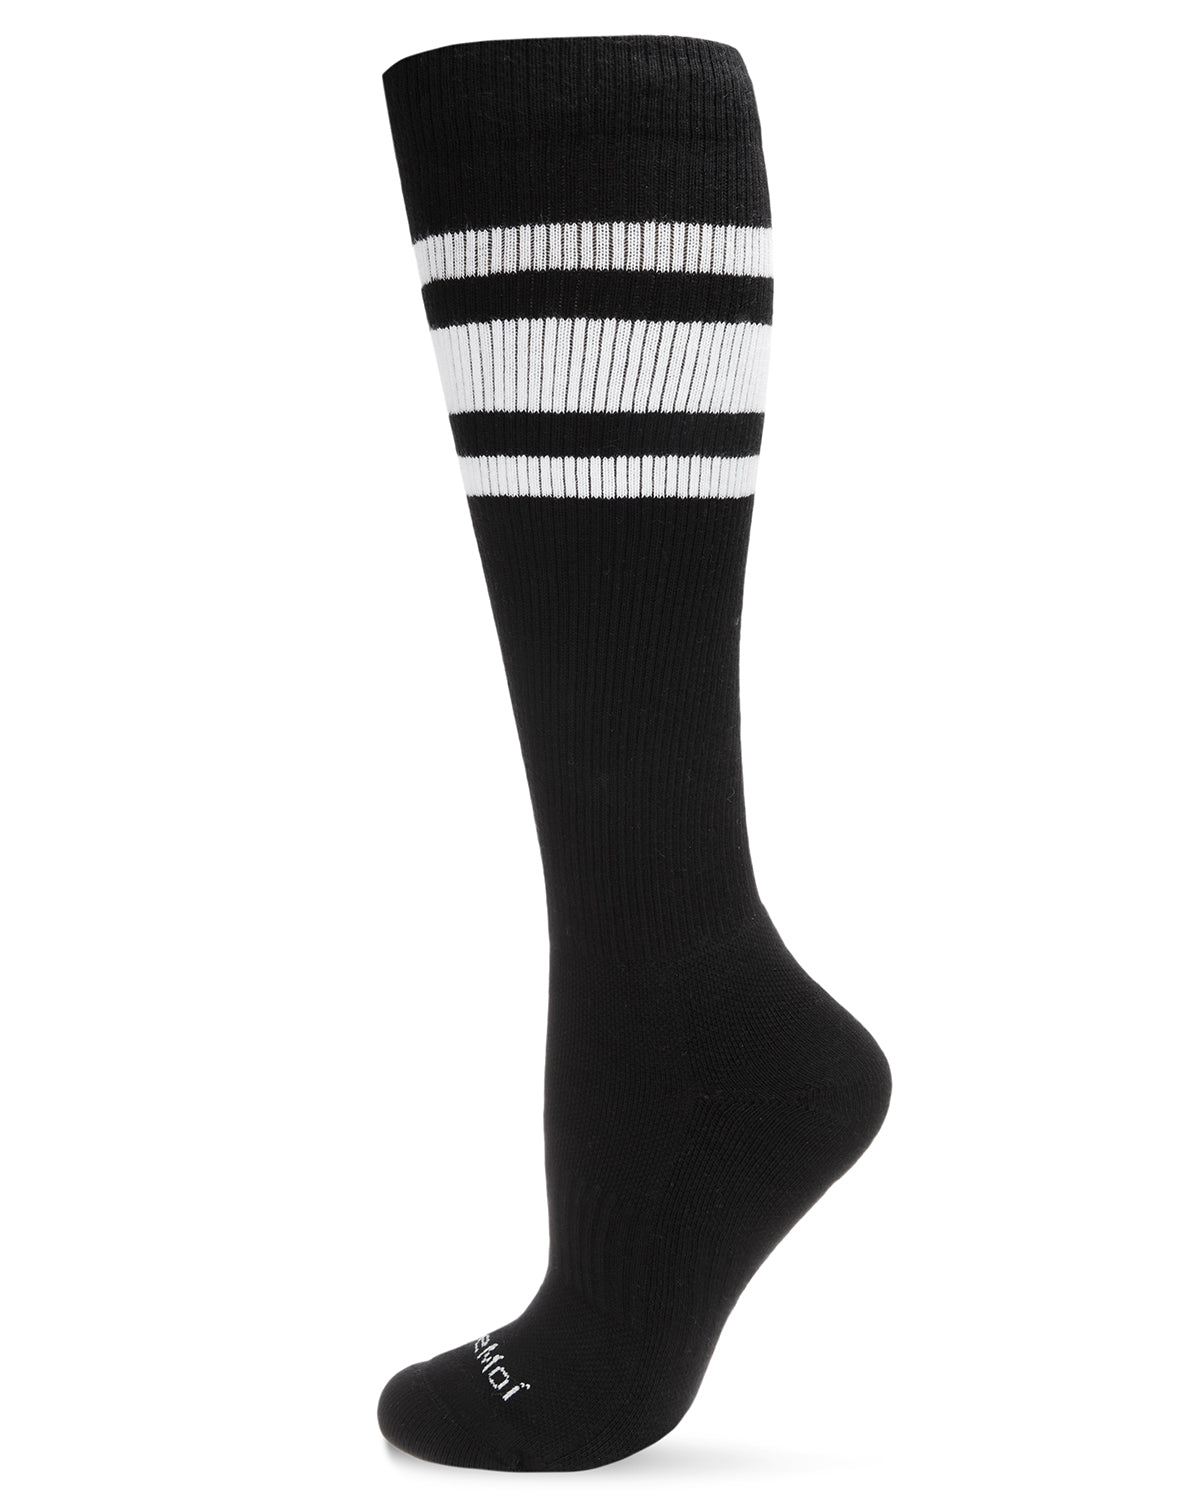 Unisex Striped Athletic Cushion Sole Knee High Cotton Blend 15-20mmHg Graduated Compression Socks